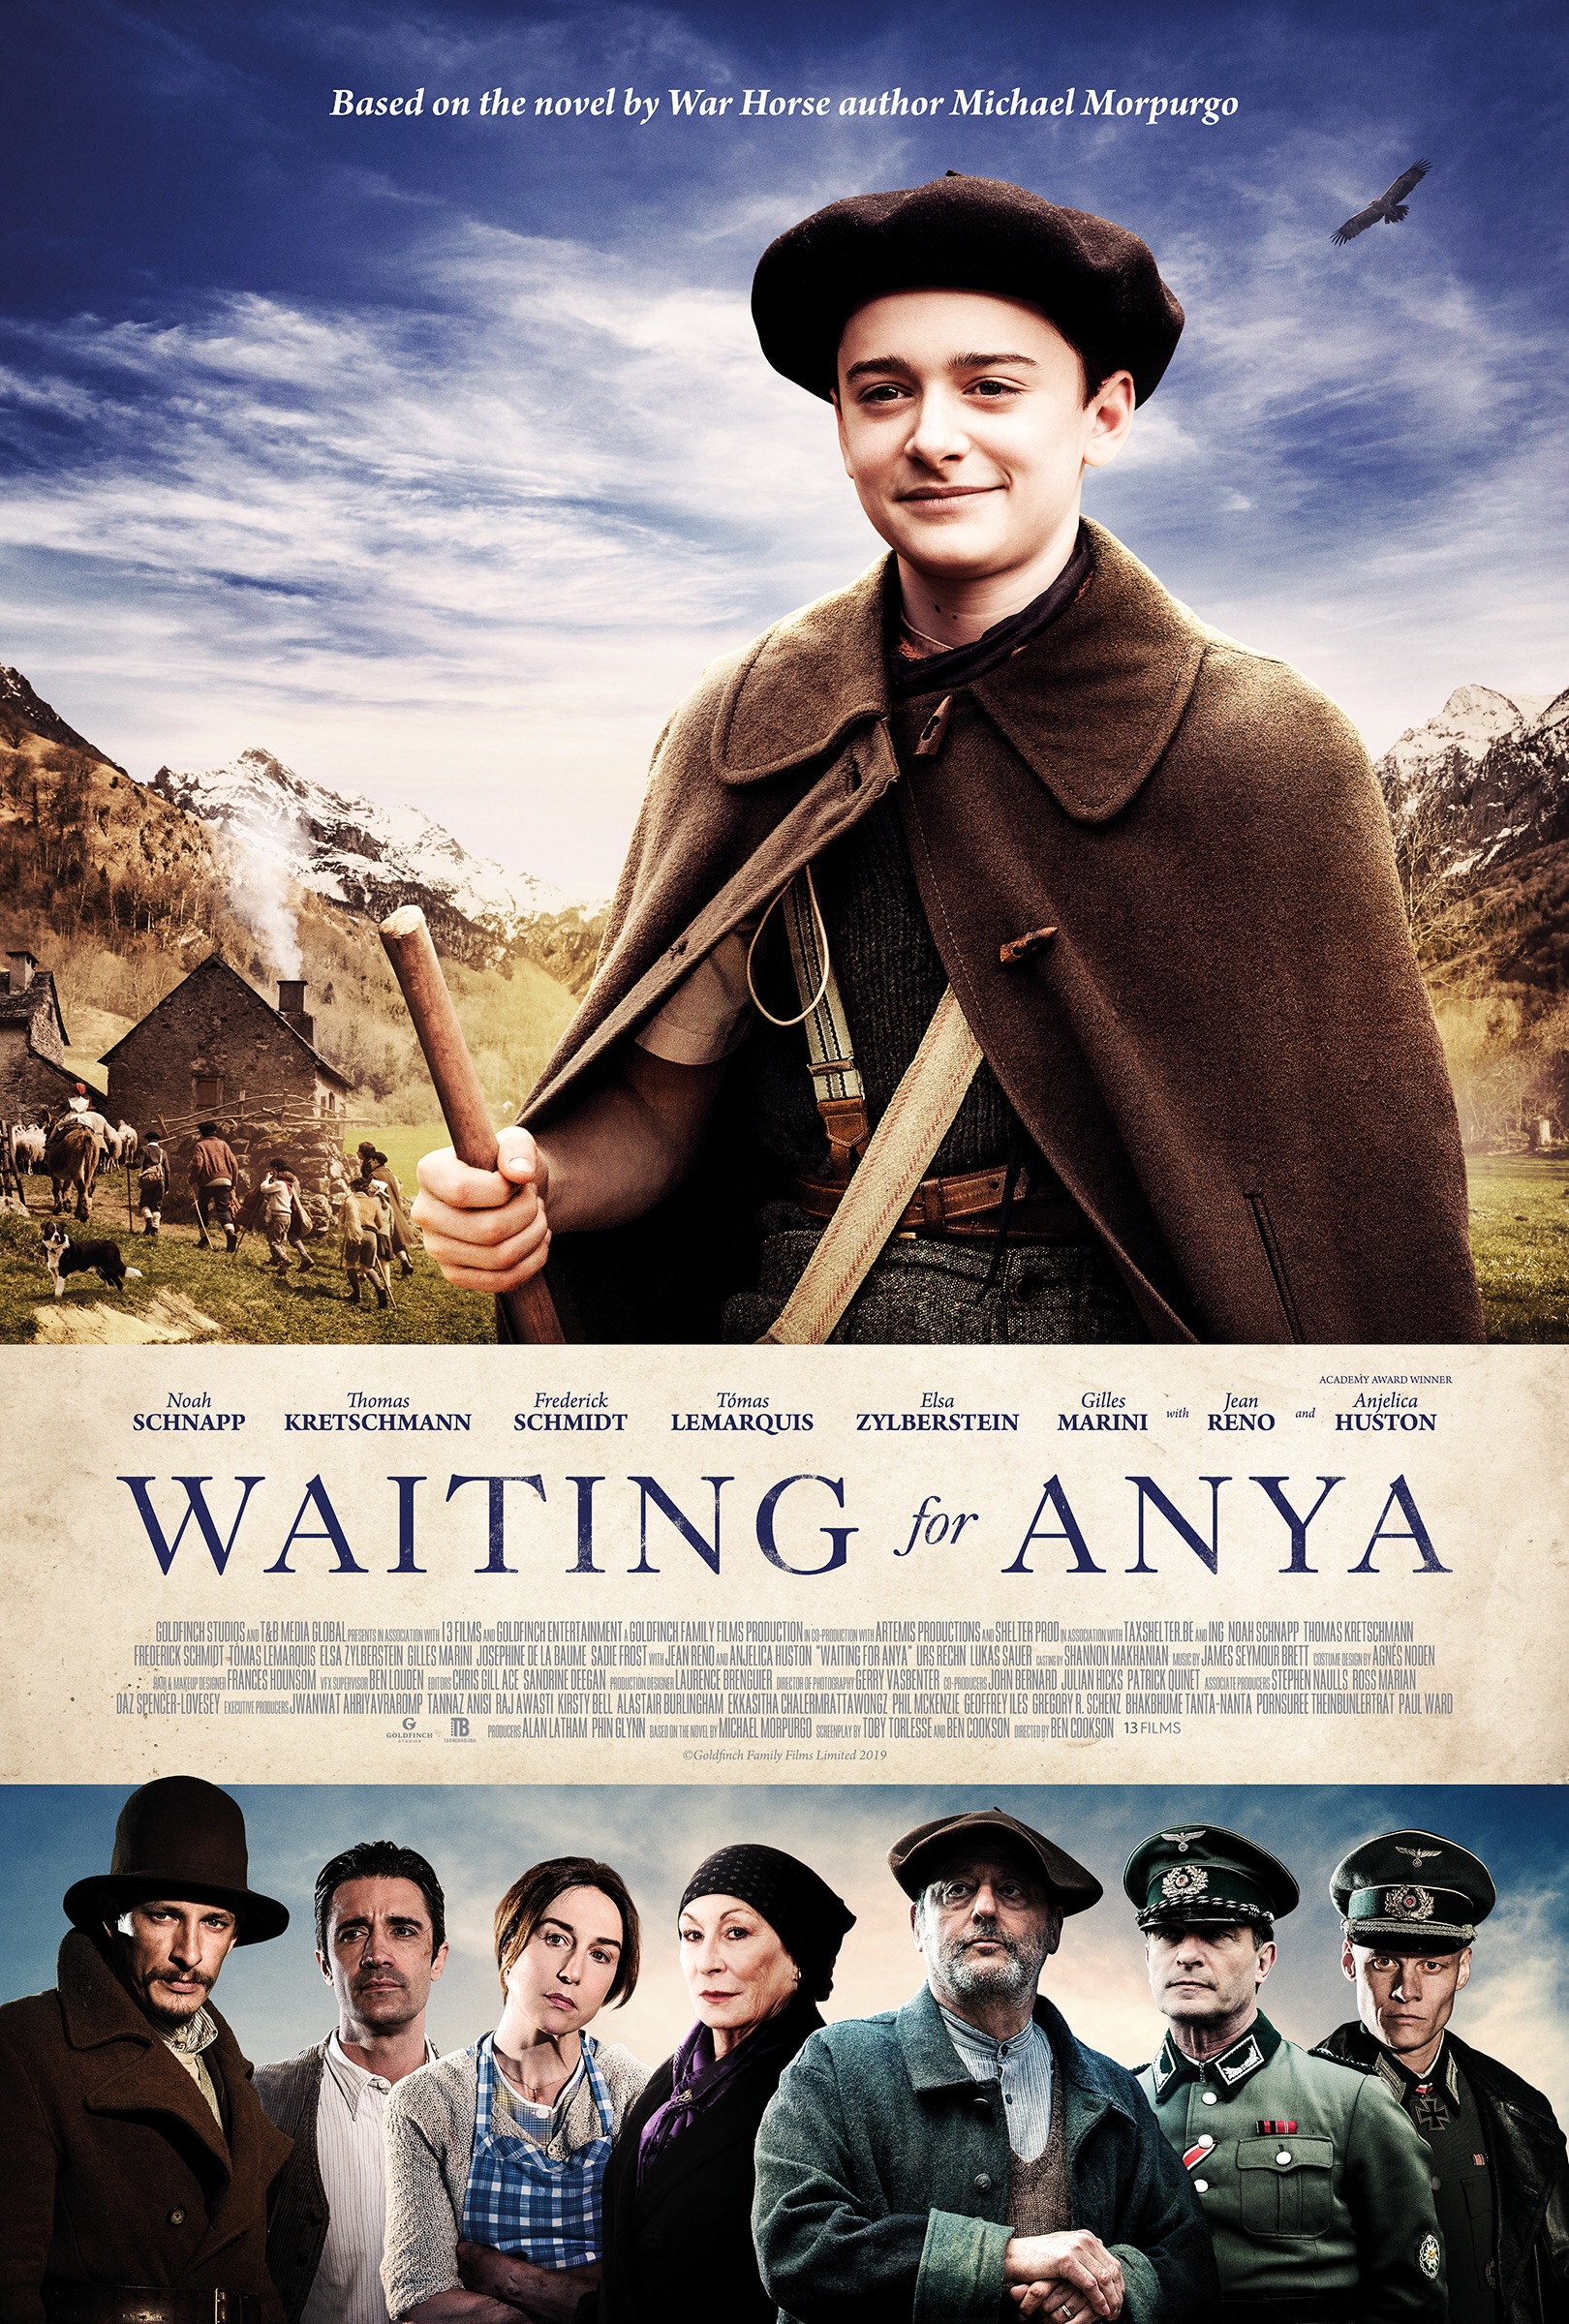 Nonton film Waiting for Anya layarkaca21 indoxx1 ganool online streaming terbaru